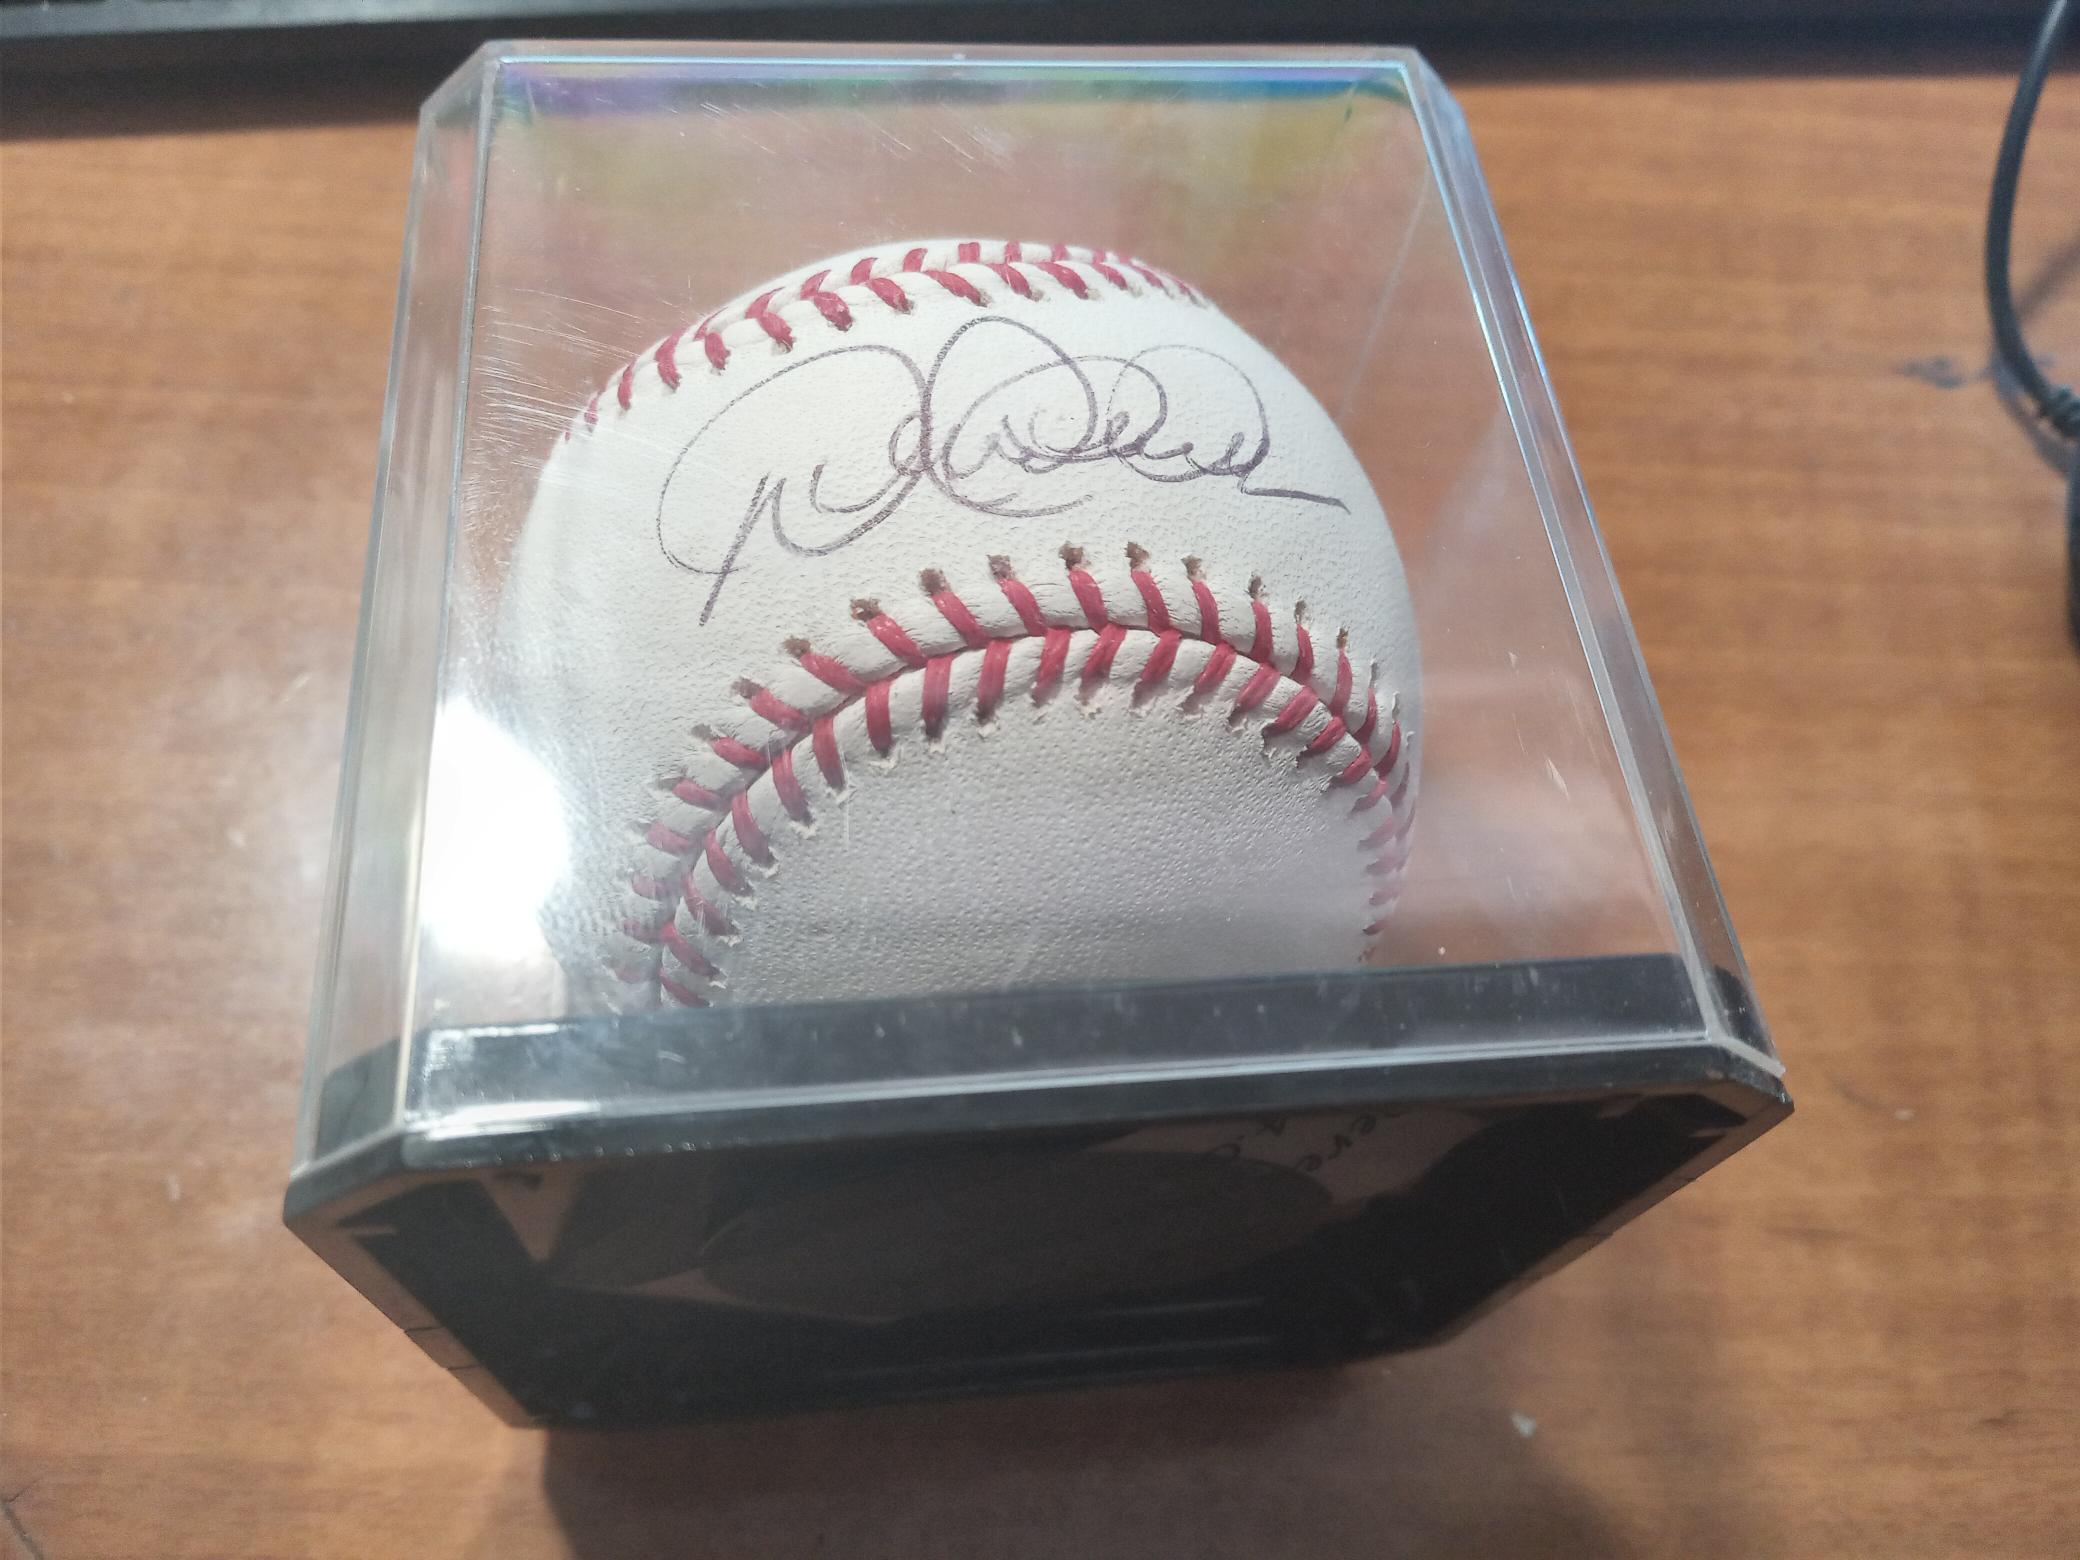 Derek Jeter New York Yankees MLB official baseball signed with proof and framed